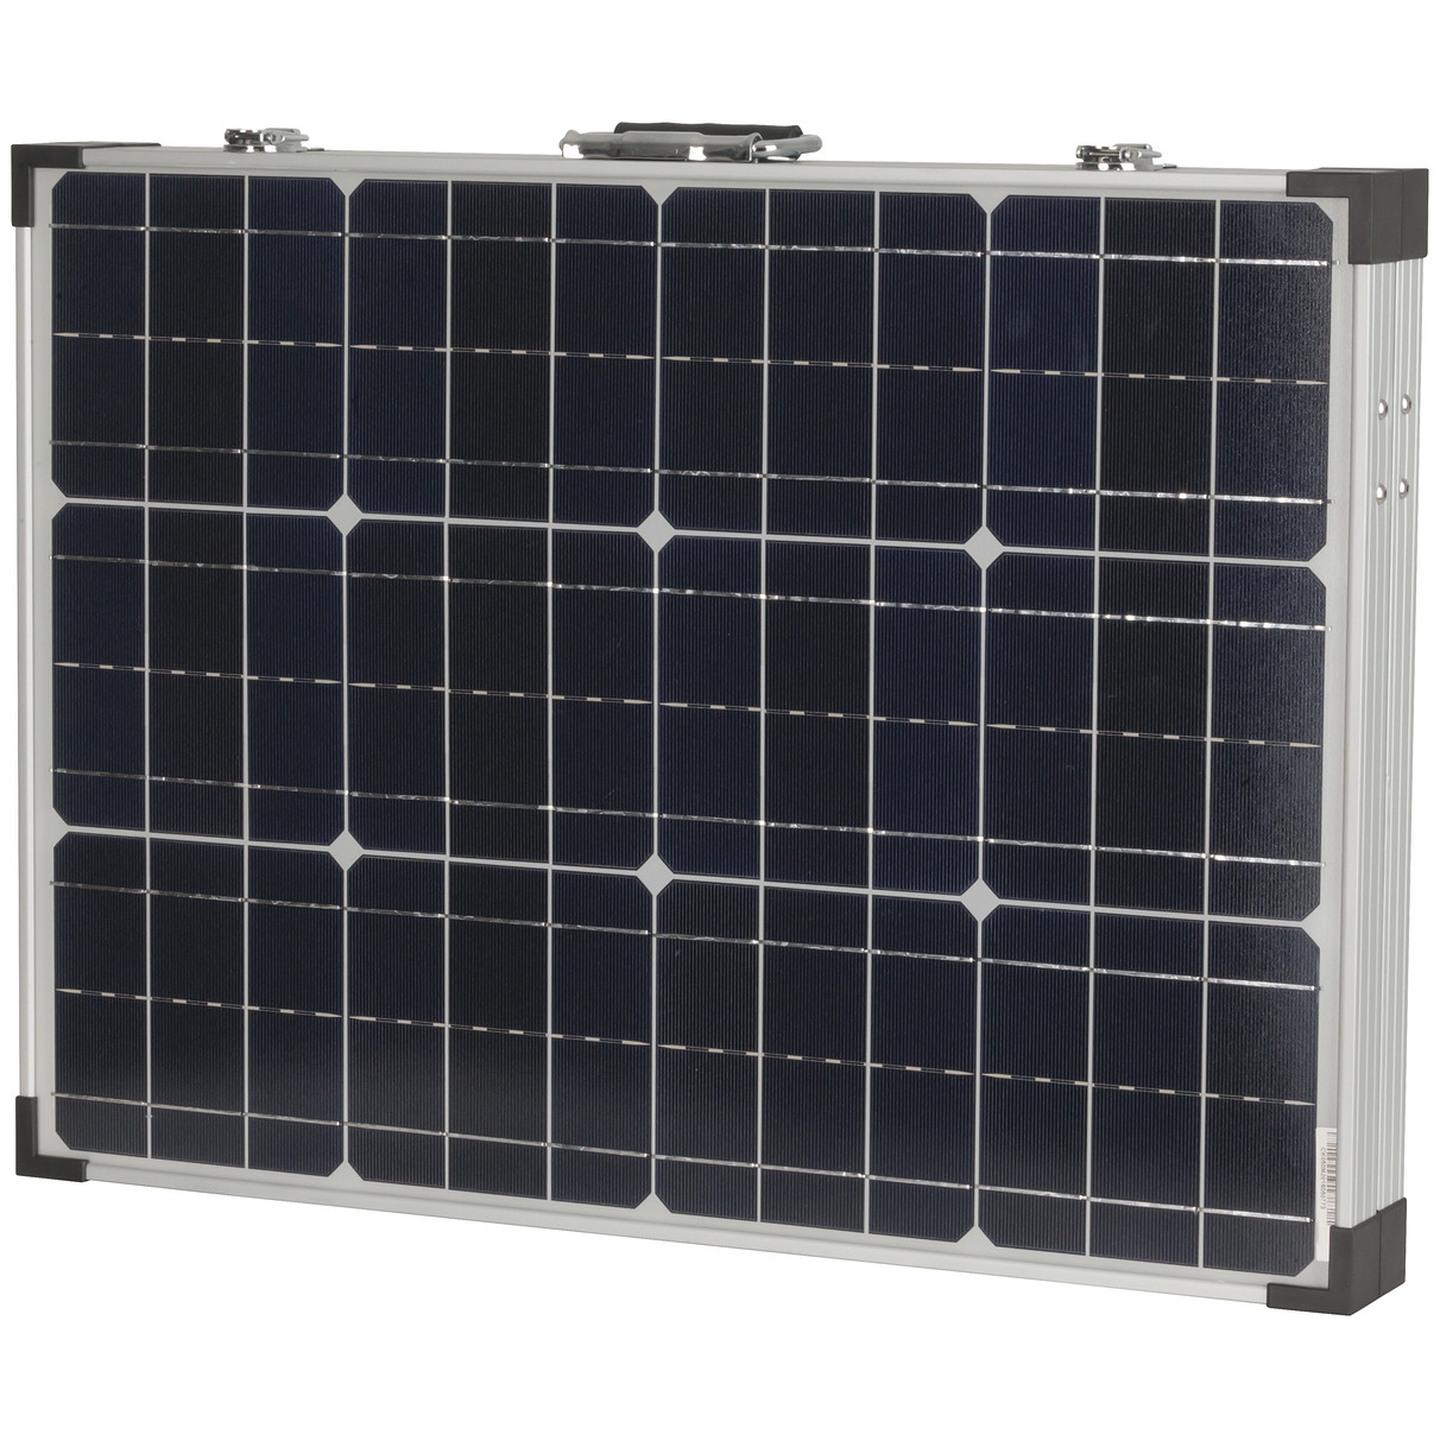 Powertech 100W Fold Up Solar Panel with 10m Lead